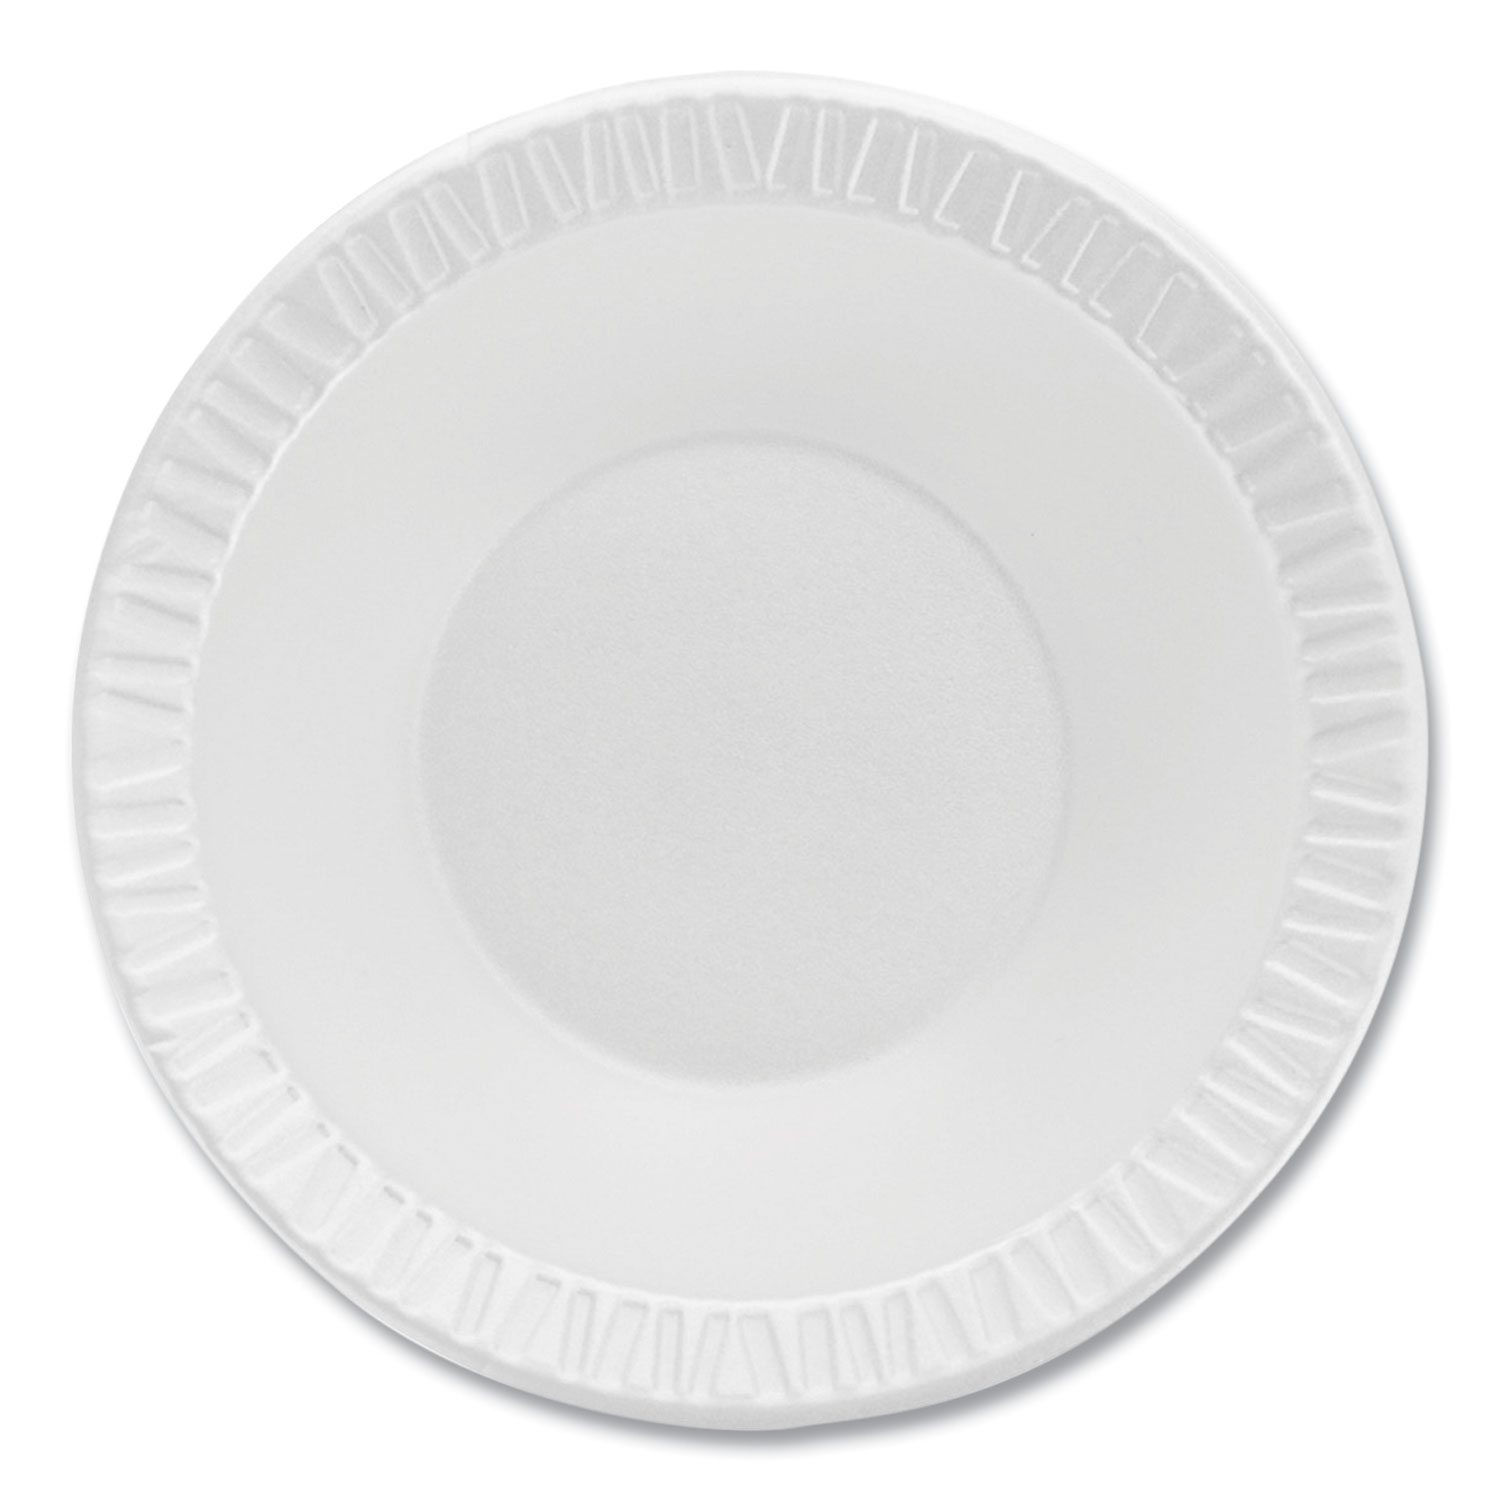 Publix Foam Plates, White, 8-7/8 in  The Loaded Kitchen Anna Maria Island